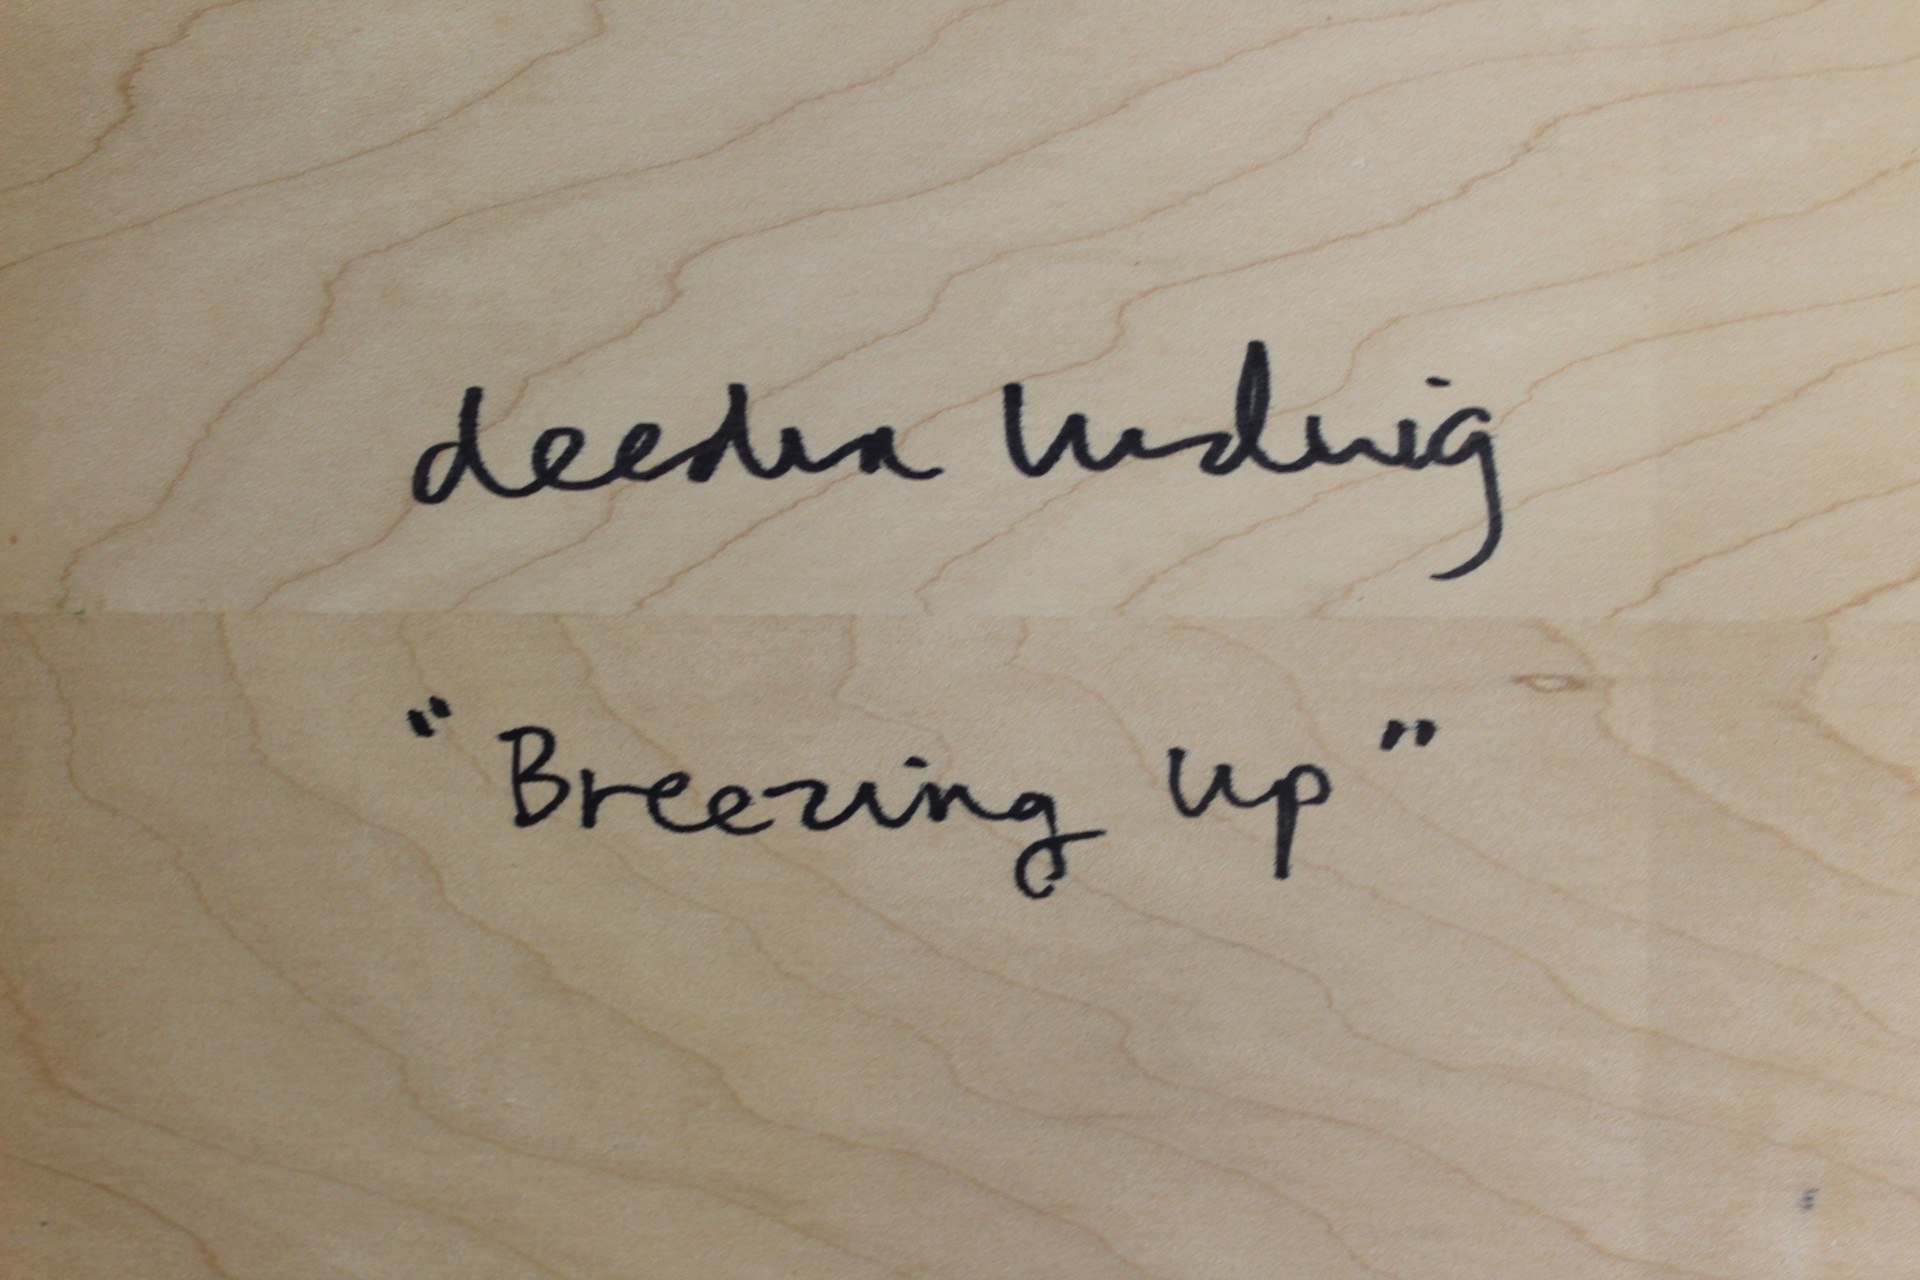 Breezing Up by Deedra Ludwig